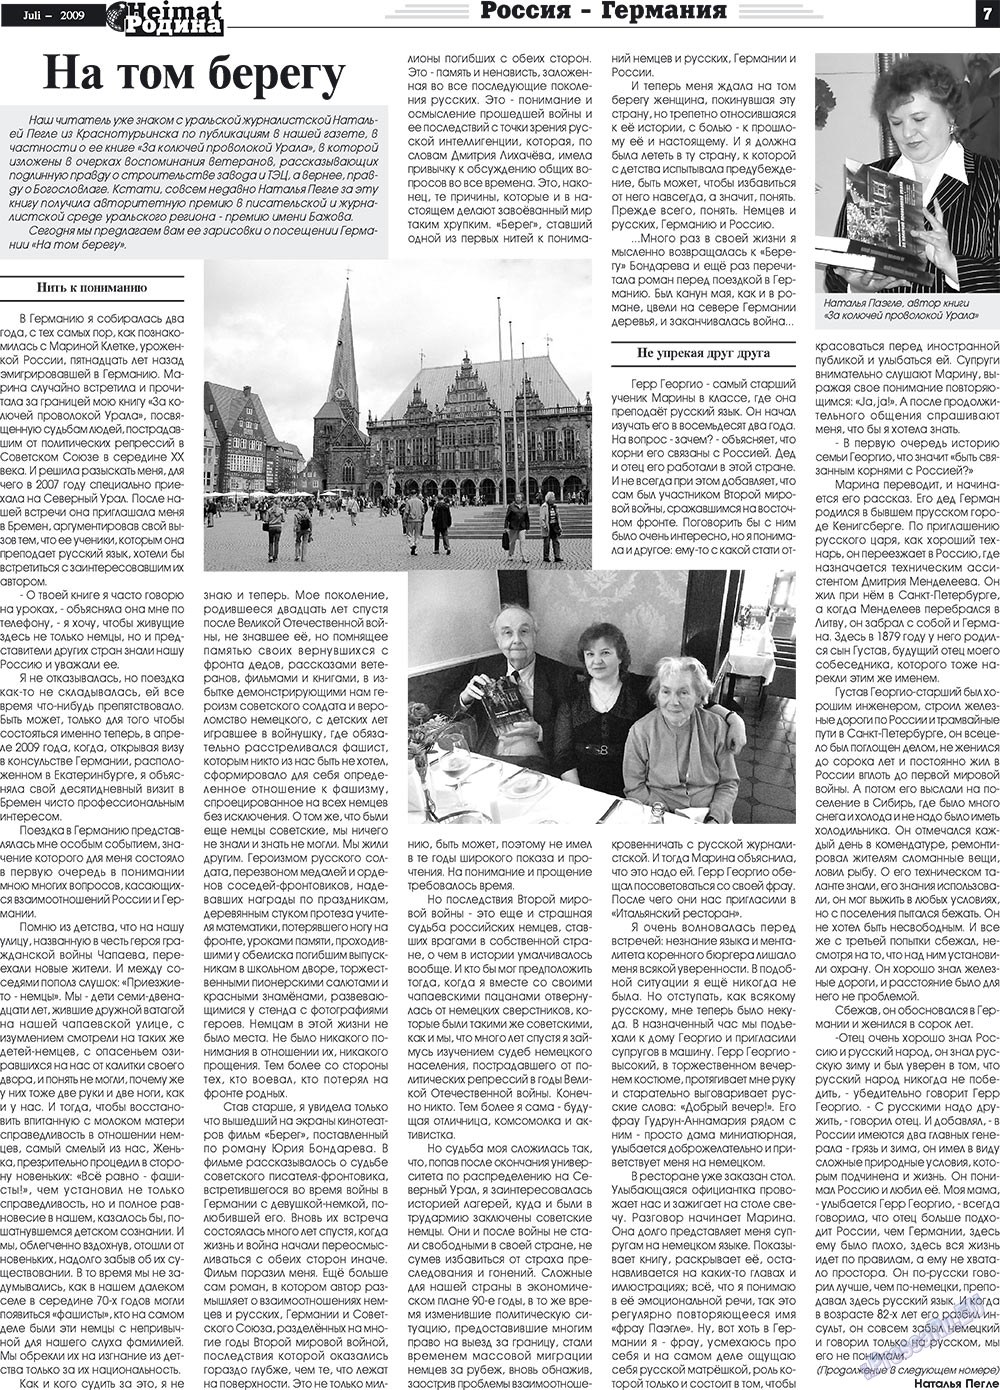 Heimat-Родина, газета. 2009 №7 стр.7